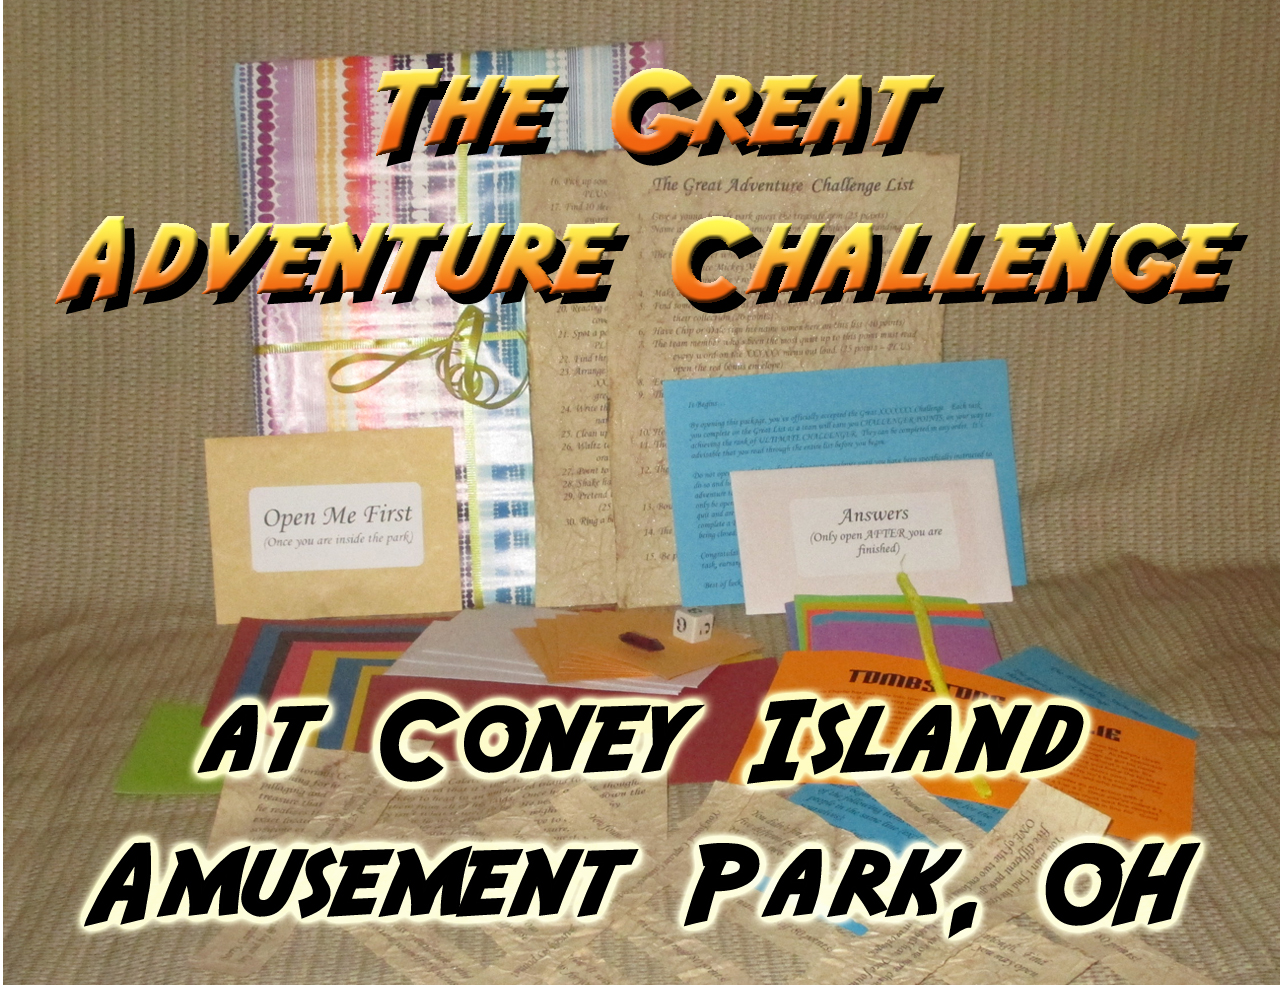 coney island amusement park scavenger hunt